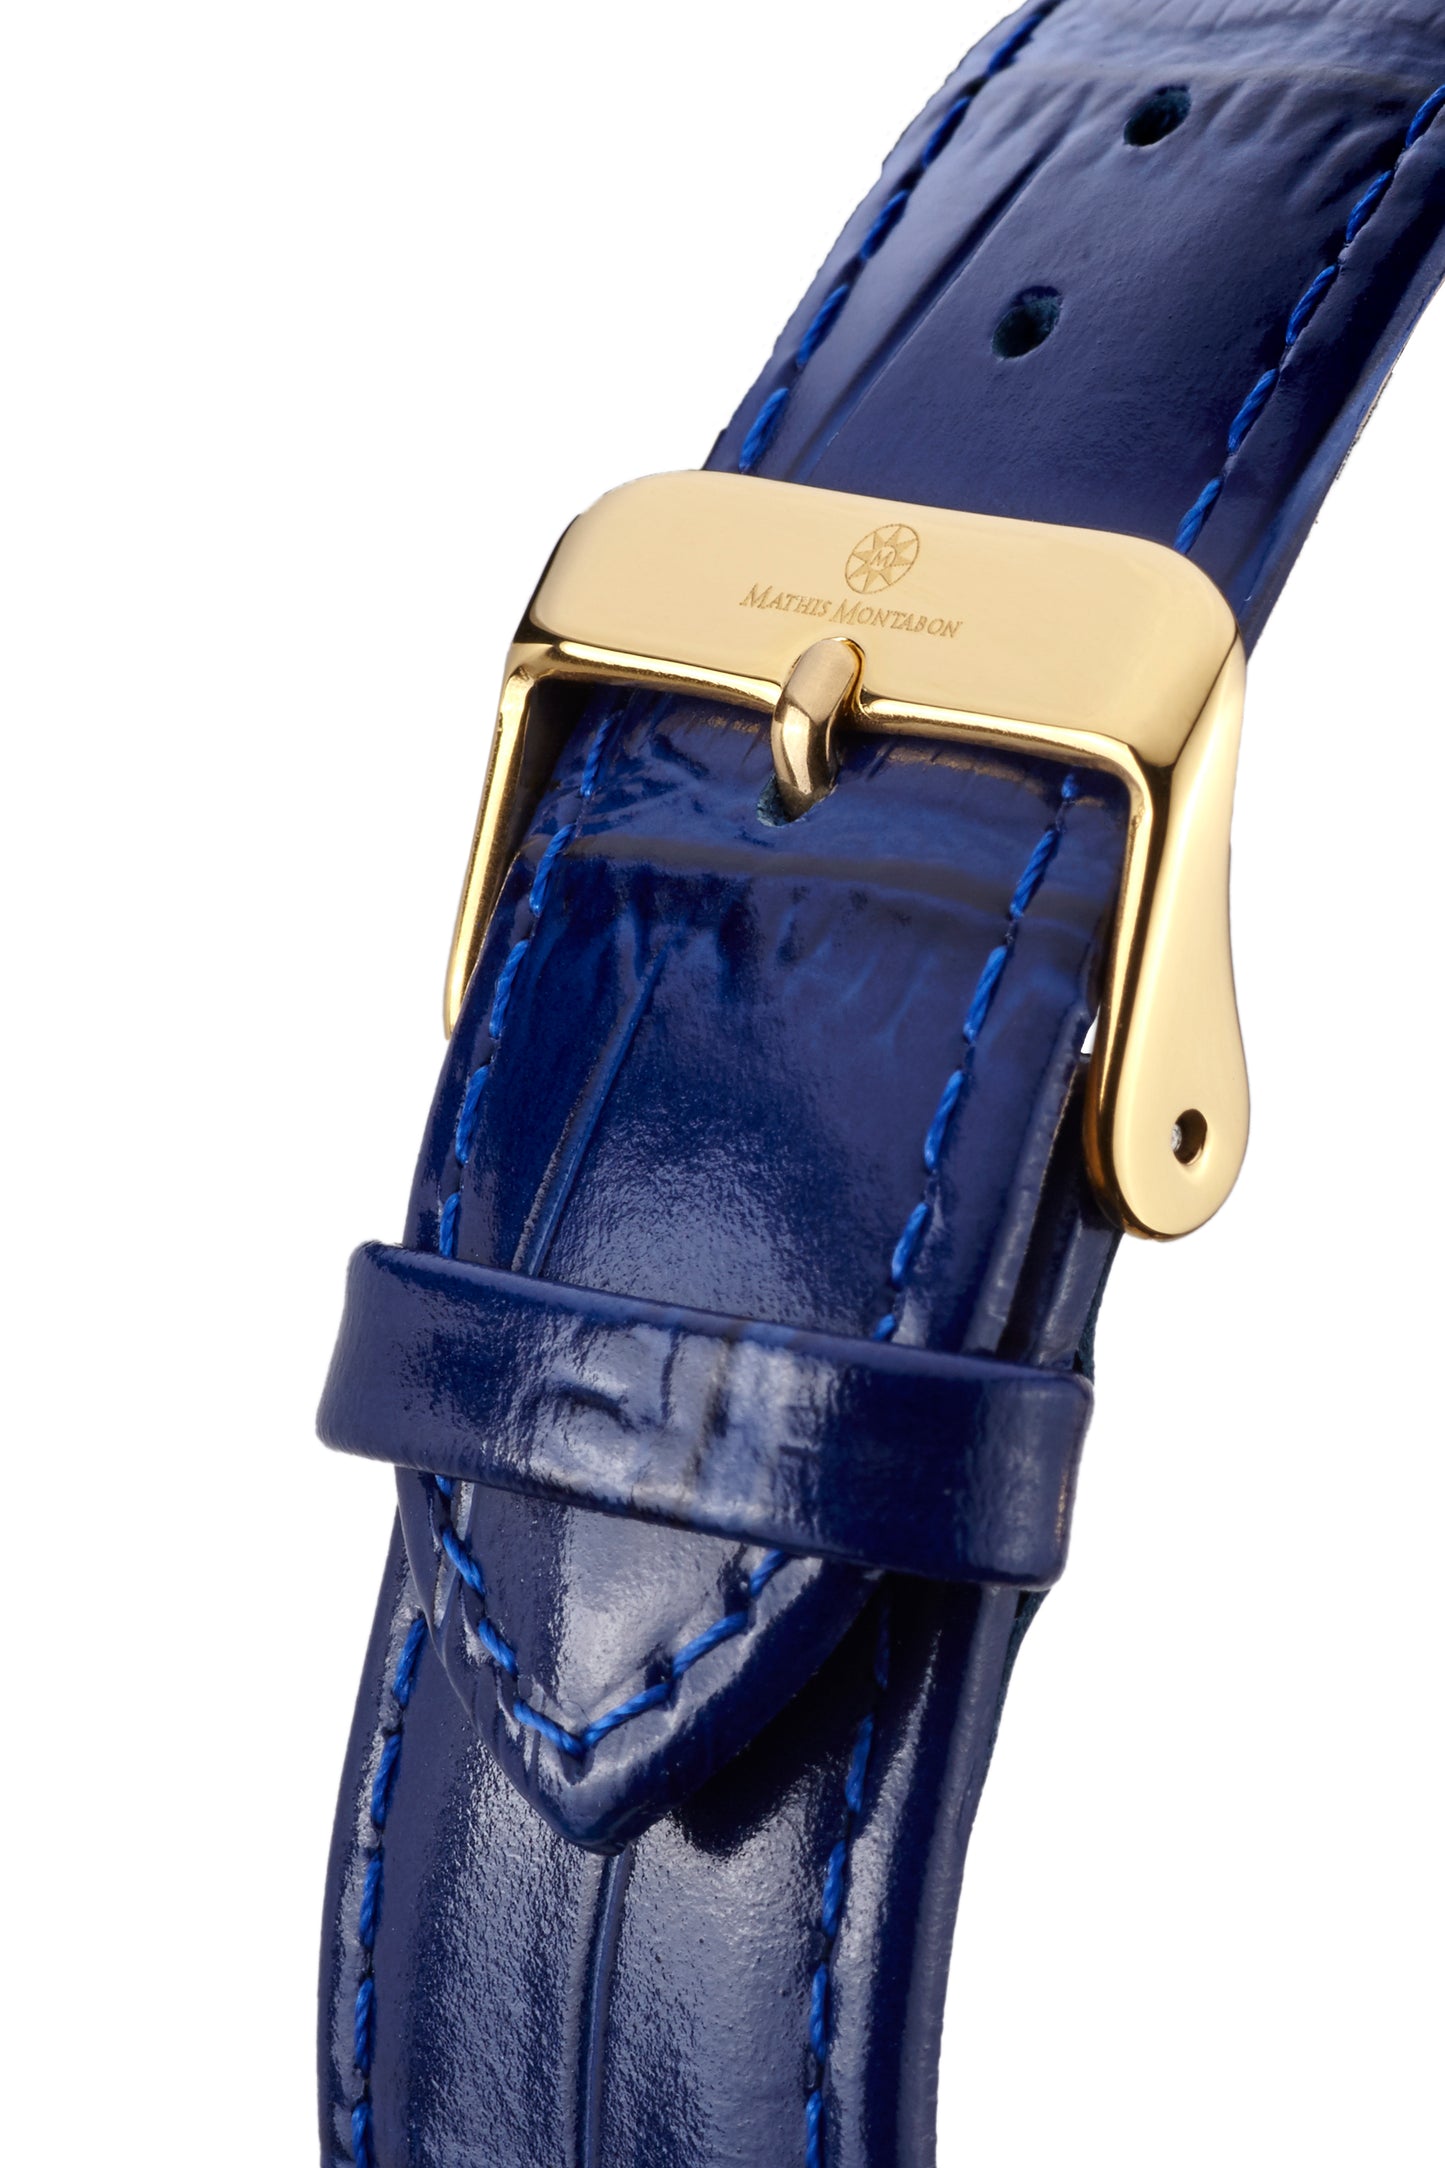 Automatic watches — Grande Date II — Mathis Montabon — gold blau